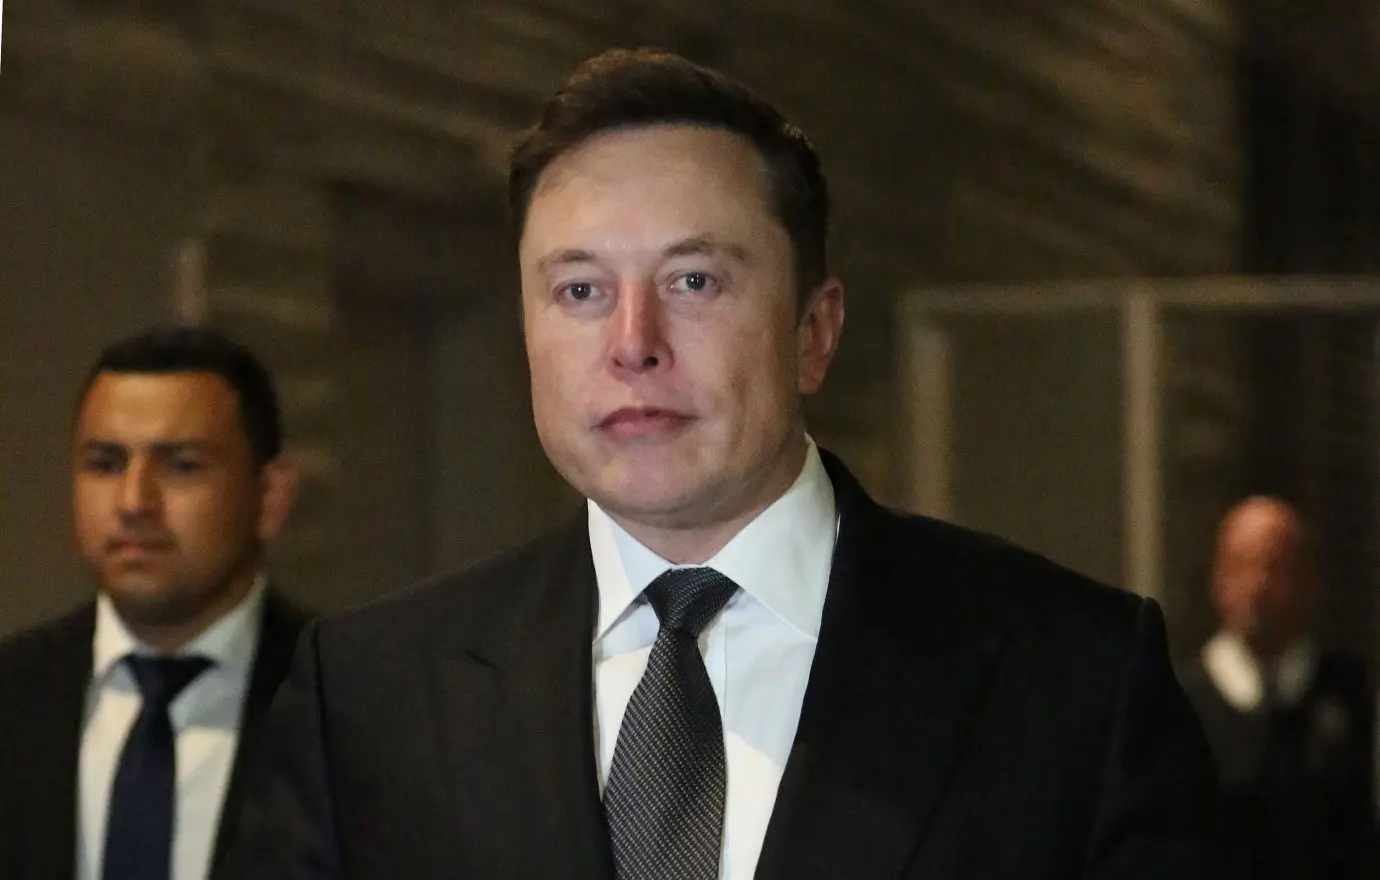 Elon Musk's Red Carpet Appearance Sparks Disney Acquisition Rumors